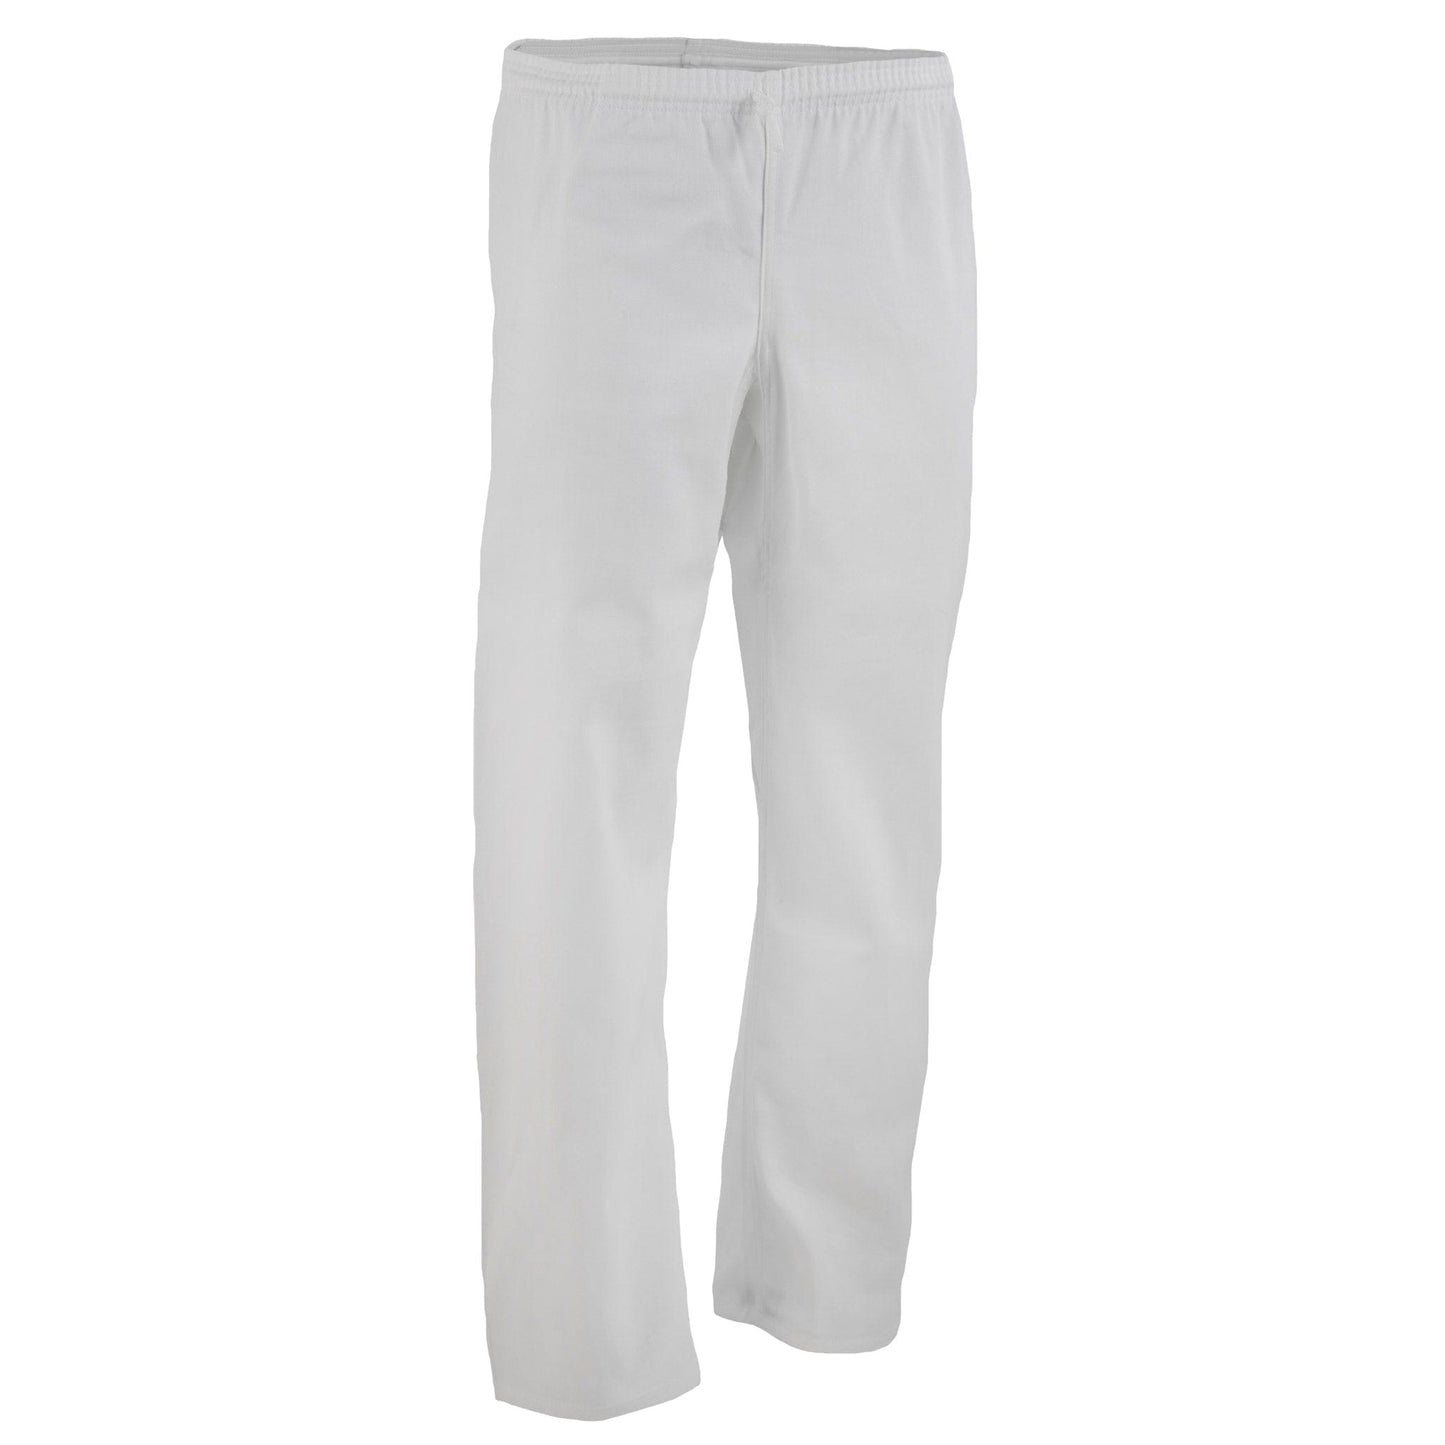 ProForce Karate Uniform ProForce 6 oz Karate Uniform Elastic Drawstring Pants poly cotton blend White